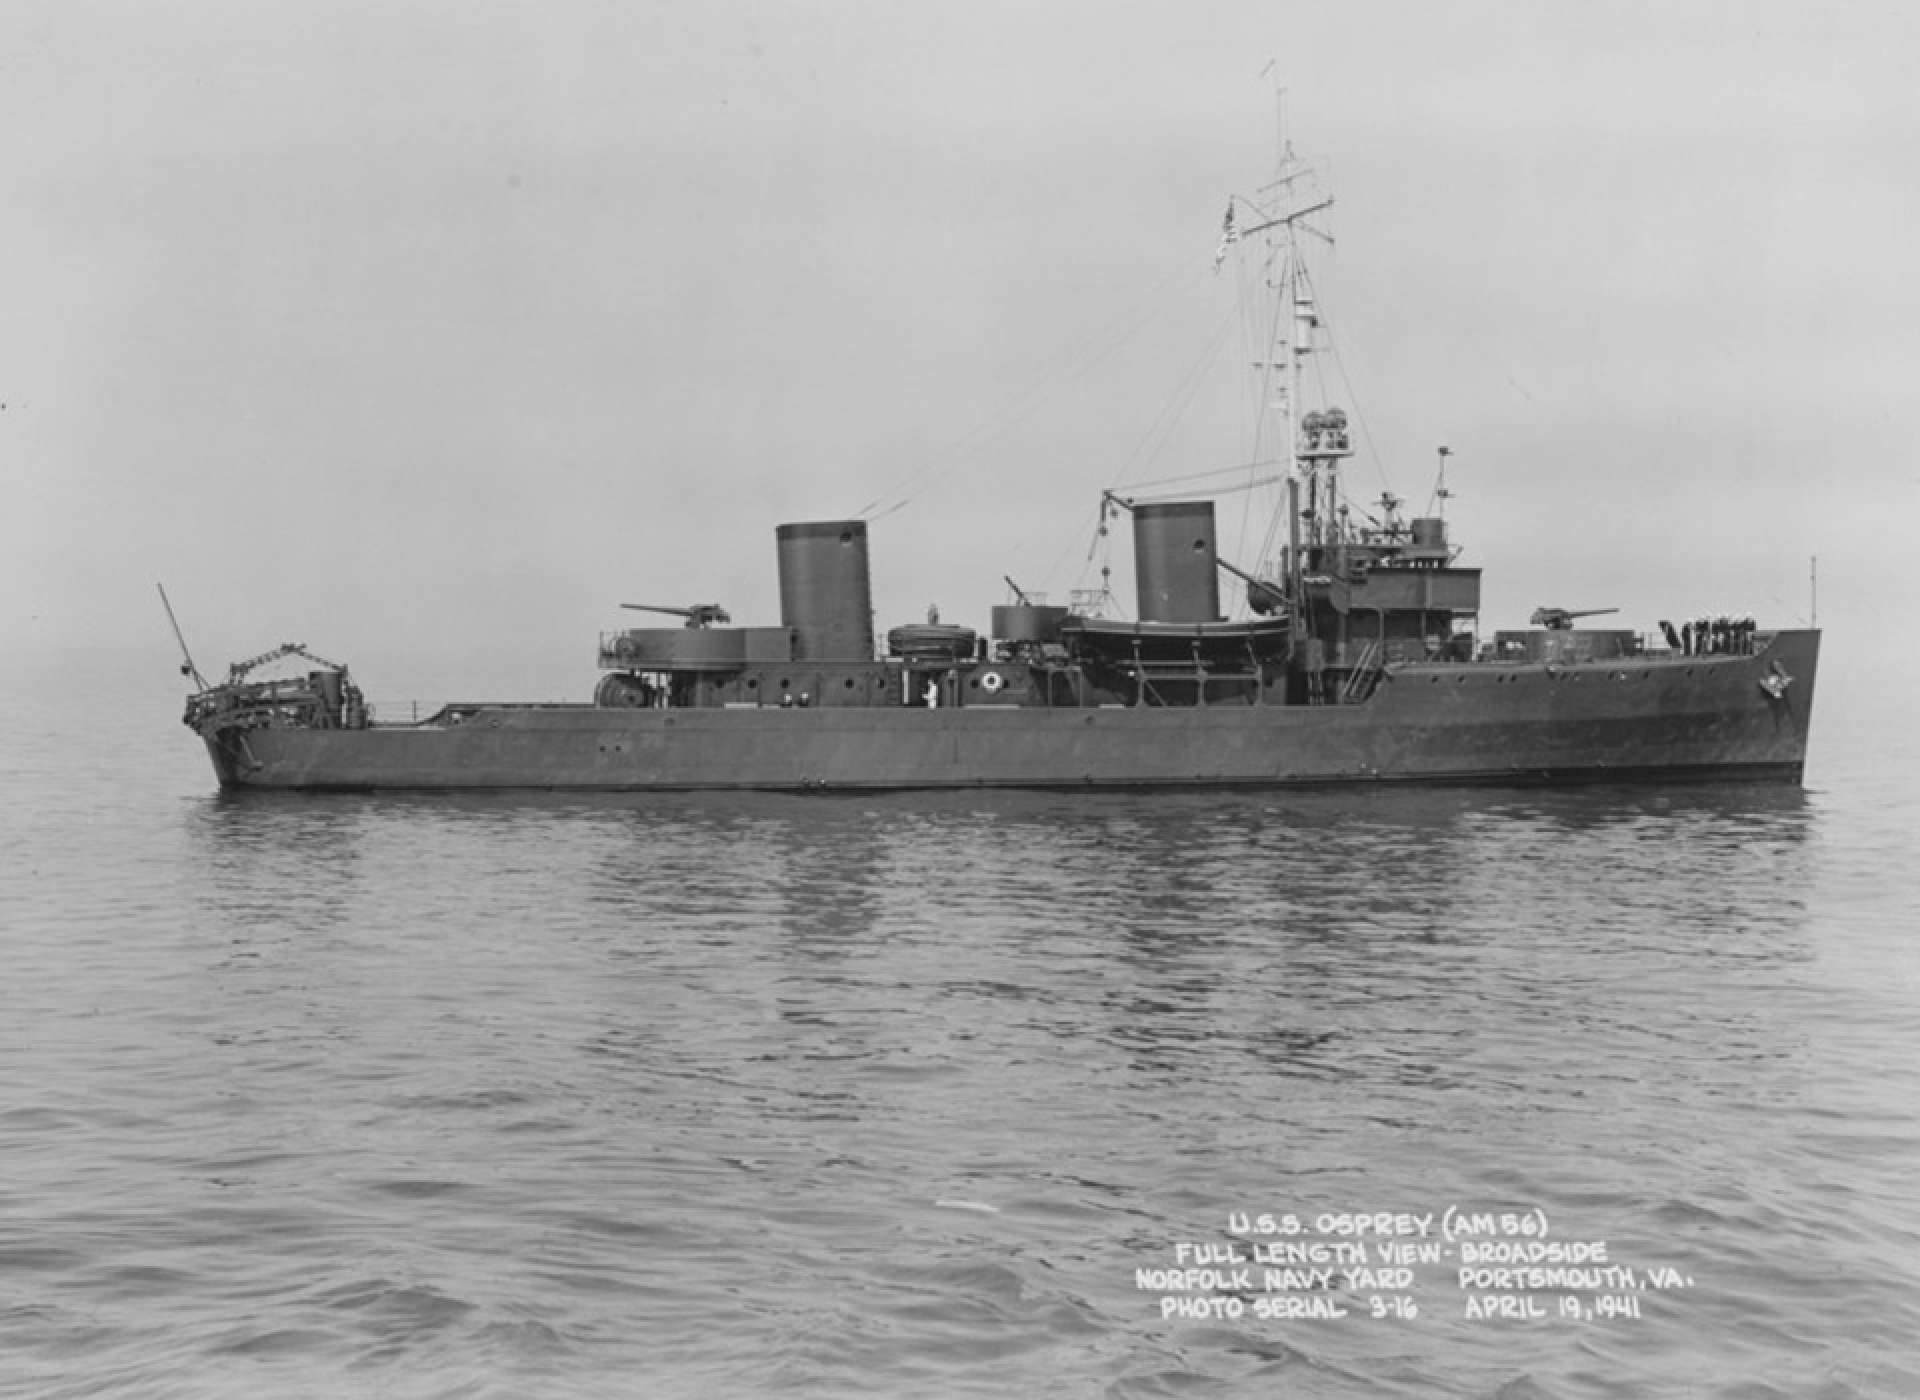 USS Osprey (AM-56)